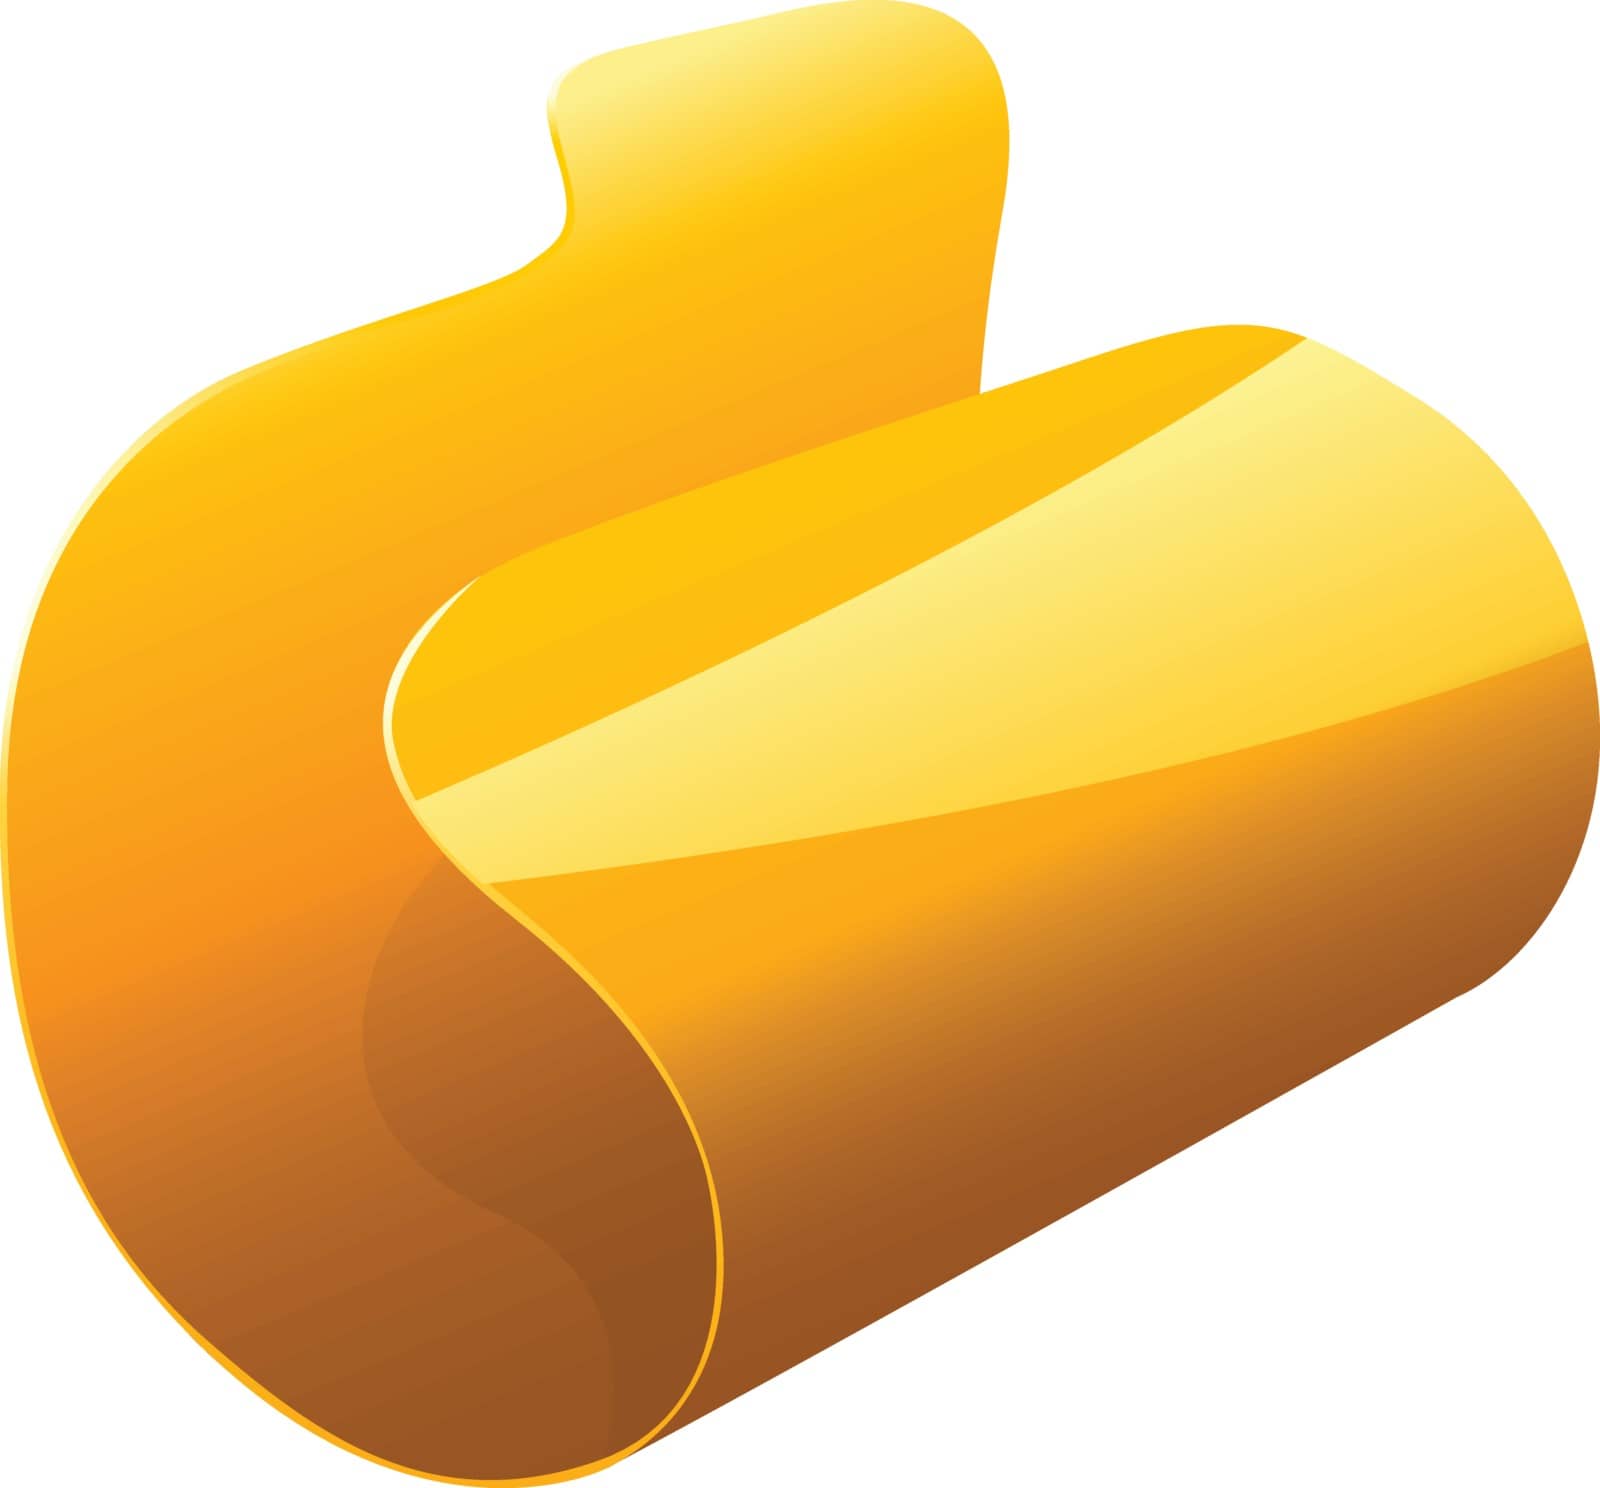 Yellow file folder icon isolated on white